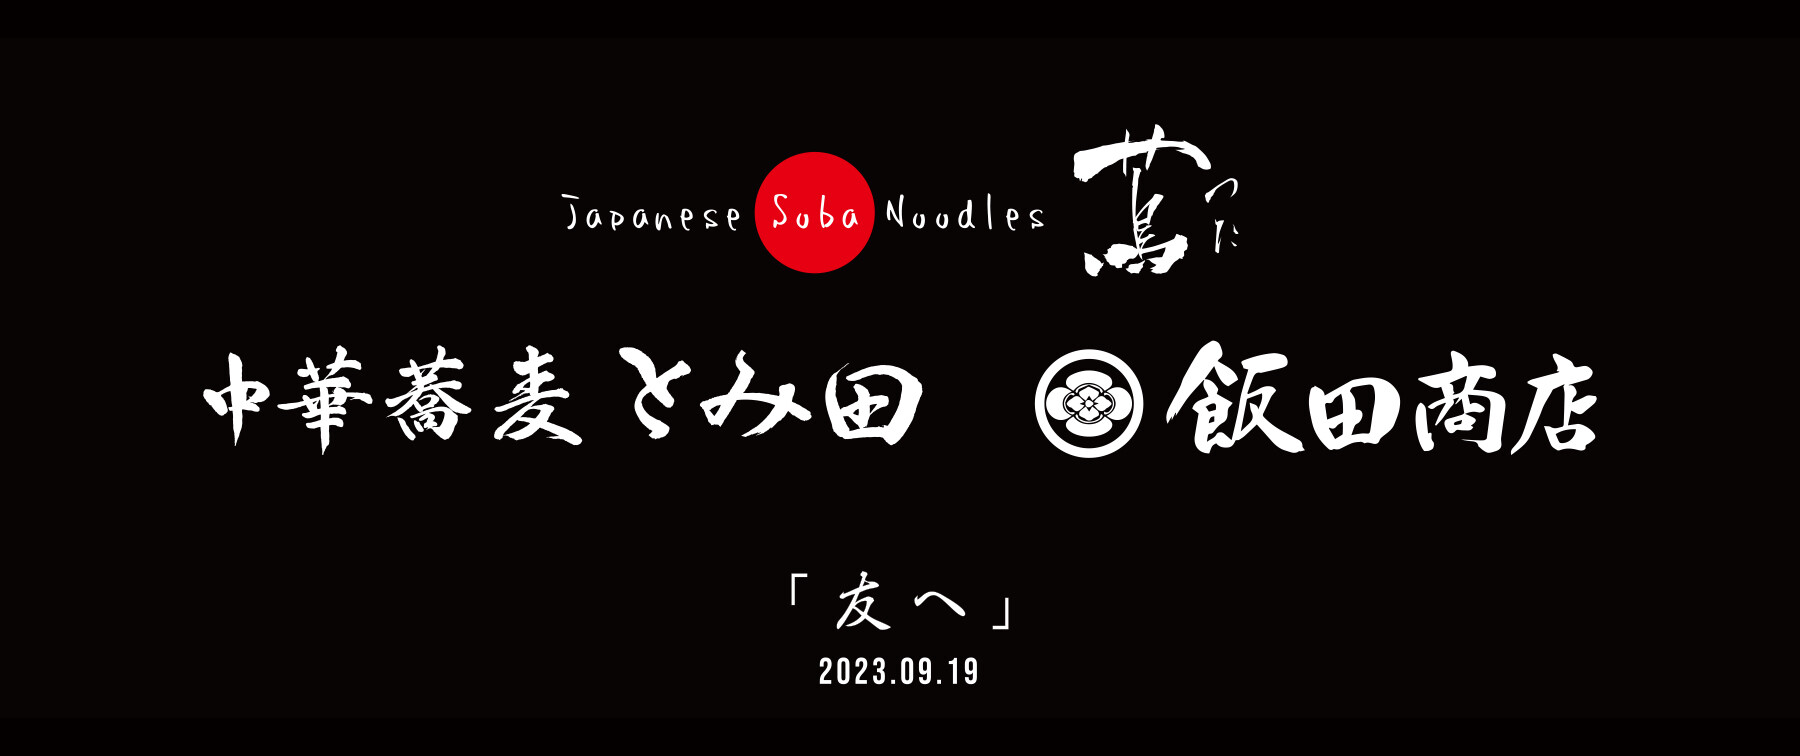 【Acceptance of applications closed】Japanese Soba Noodles Tsuta × Tomita × Ramen Iida Shouten 【Dear my friend】's image